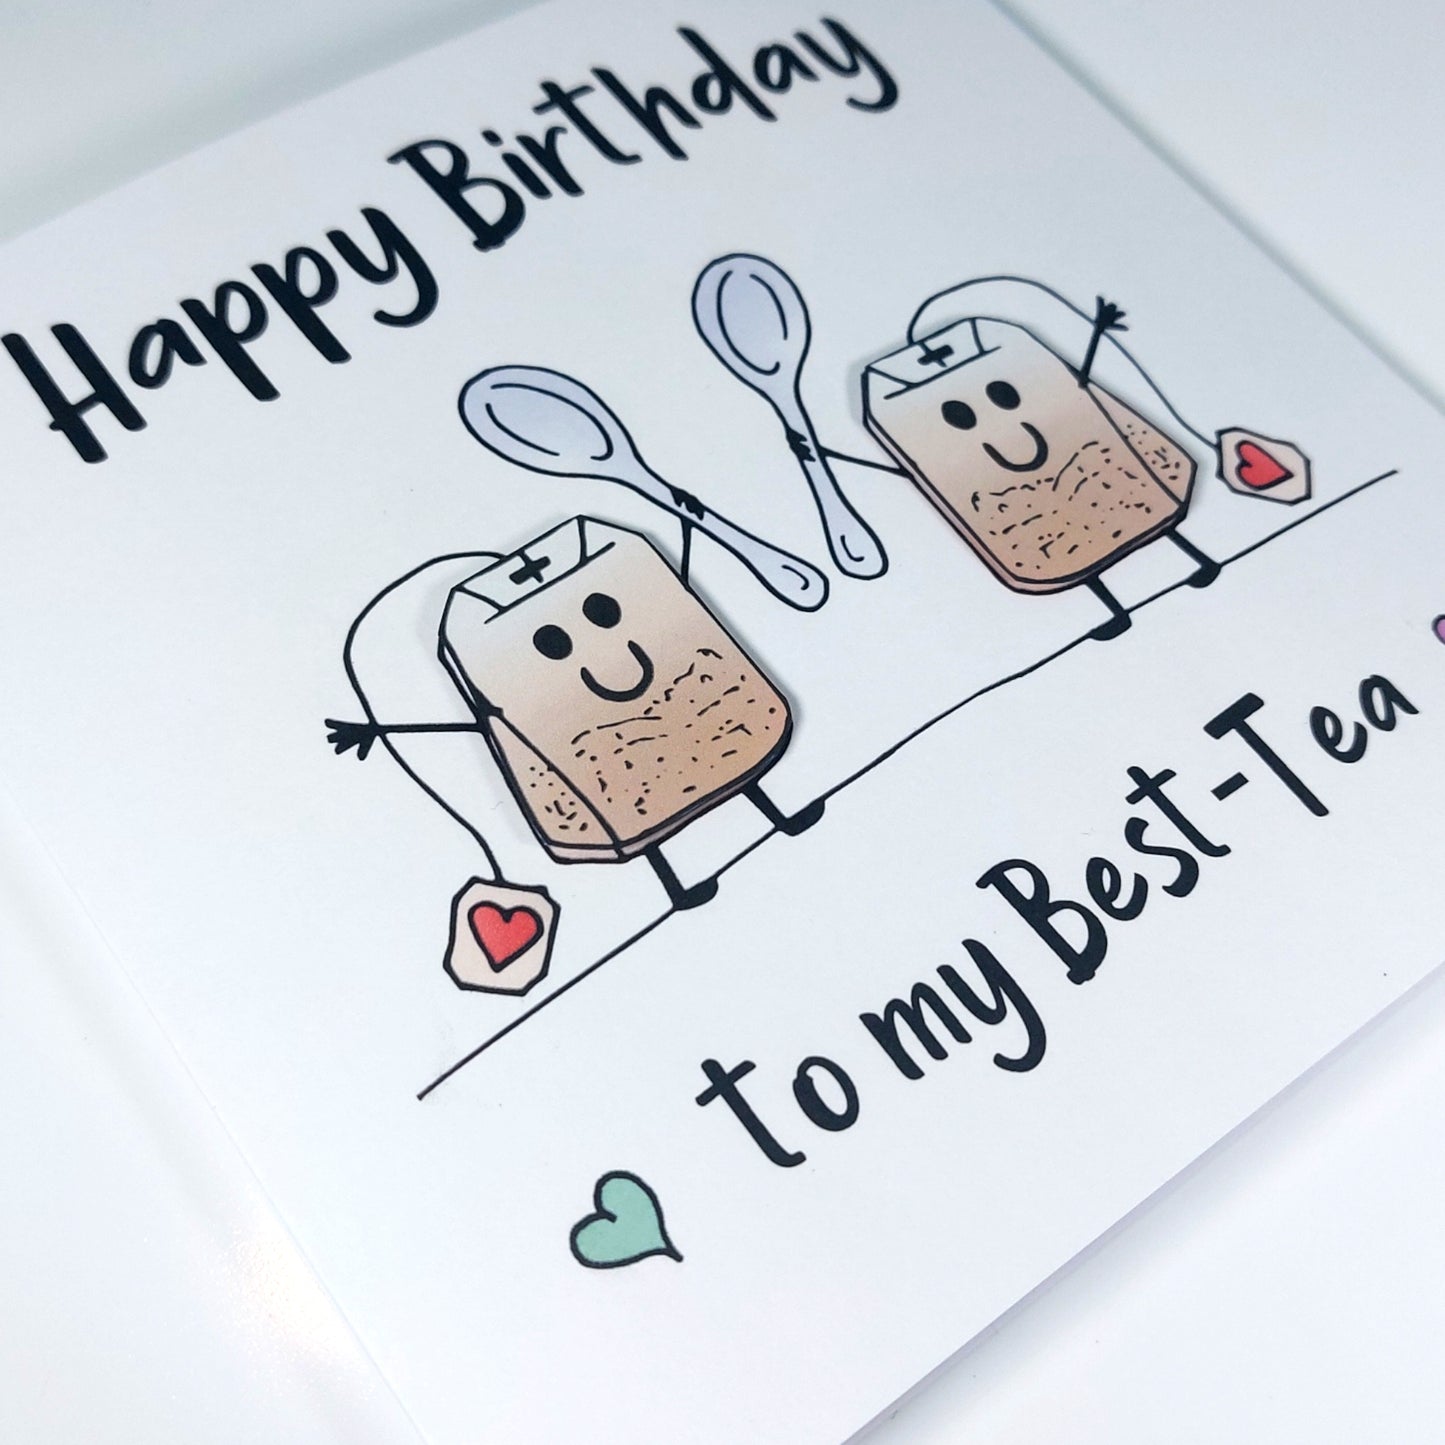 Best-tea Friend Birthday Card